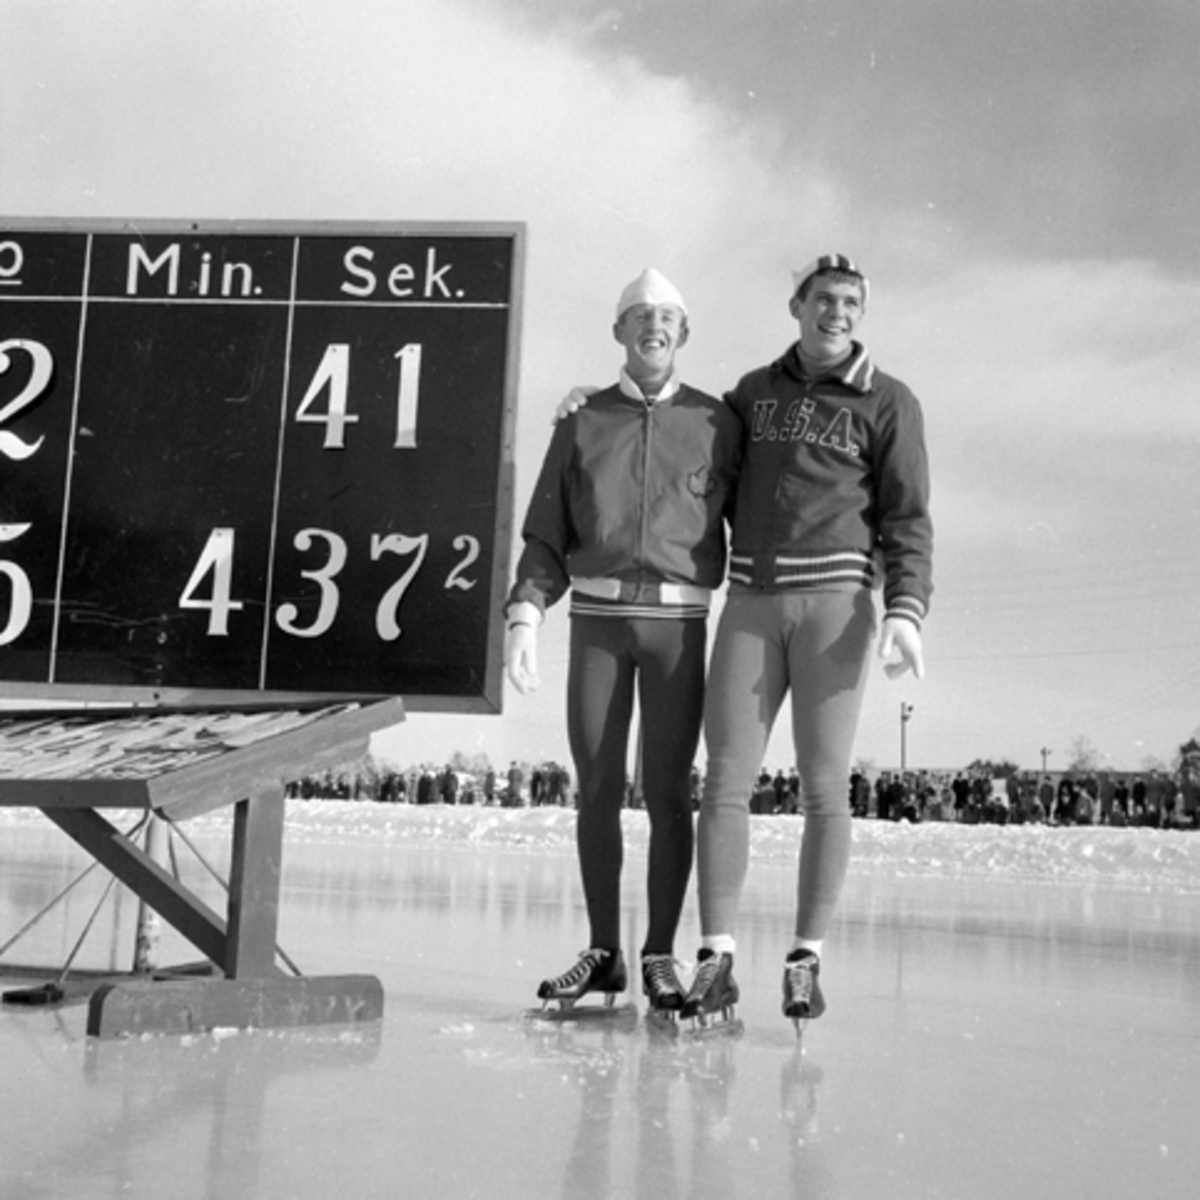 Paul Enock, Canada 4.37.2 på 3000m og Eddie Rudolp, USA, 41.0, skøyteløp, Hamar Stadion. (Foto/Photo)